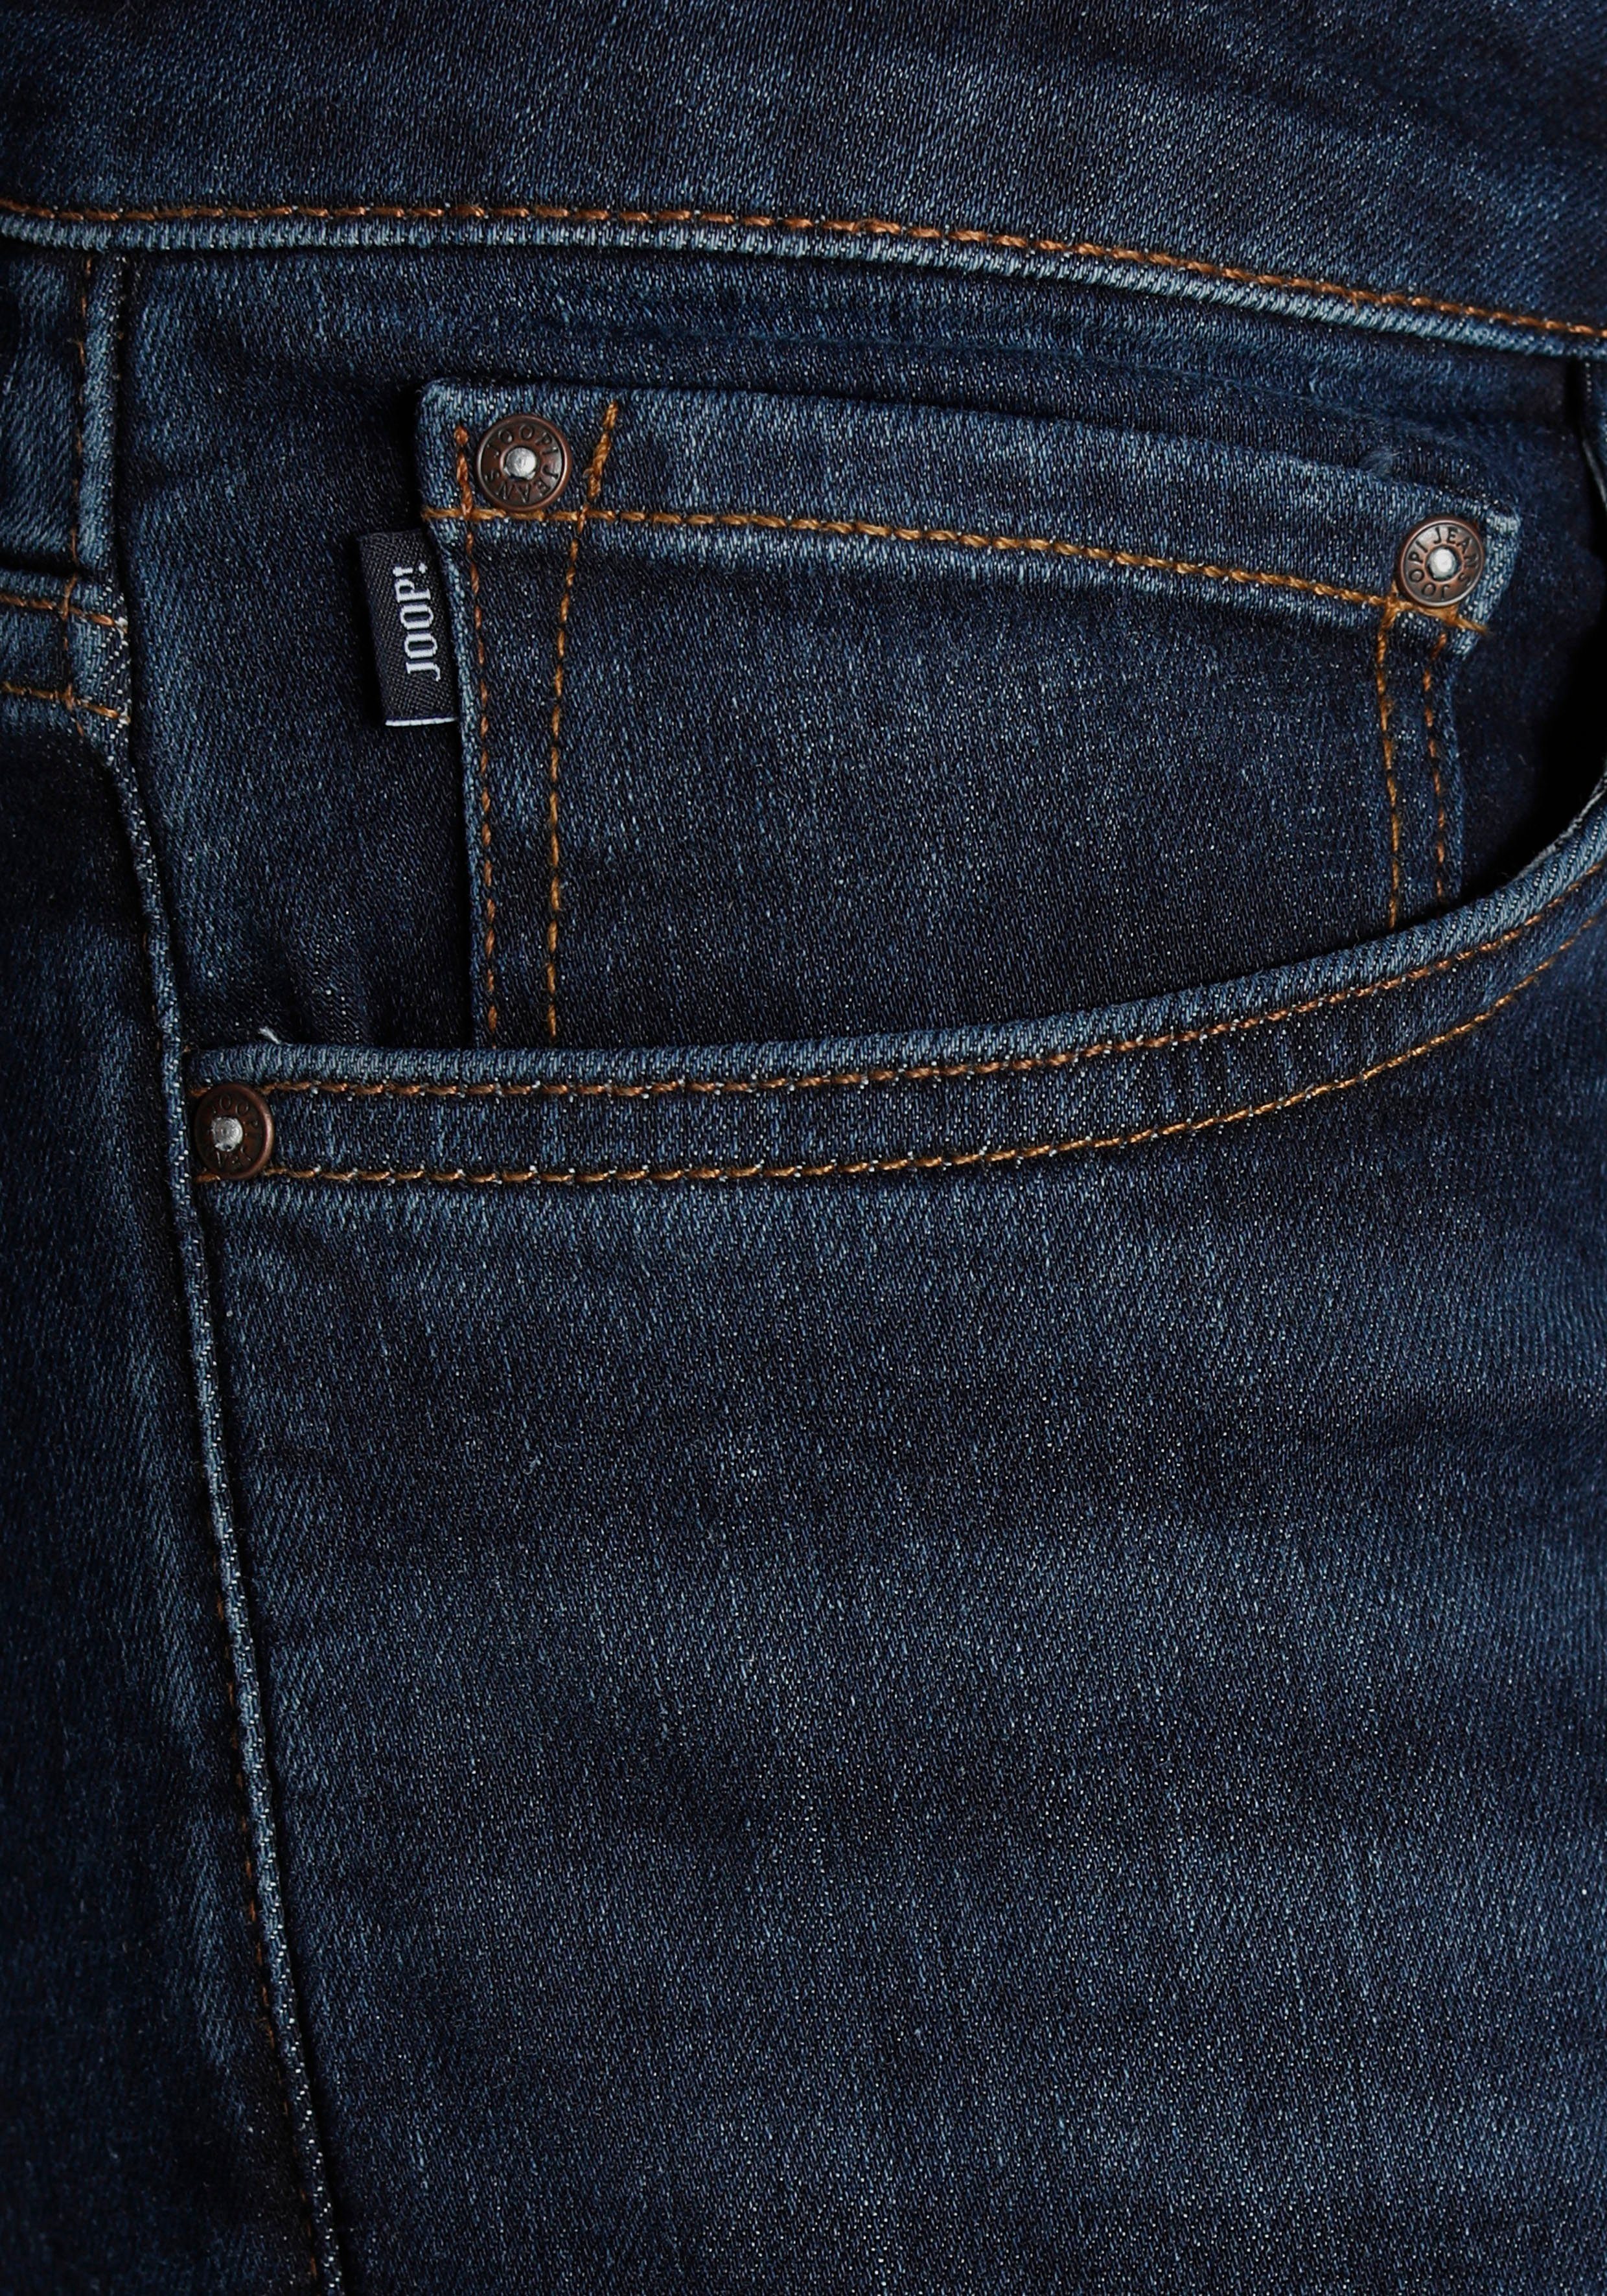 Stephen Joop 5-Pocket-Jeans navy Jeans